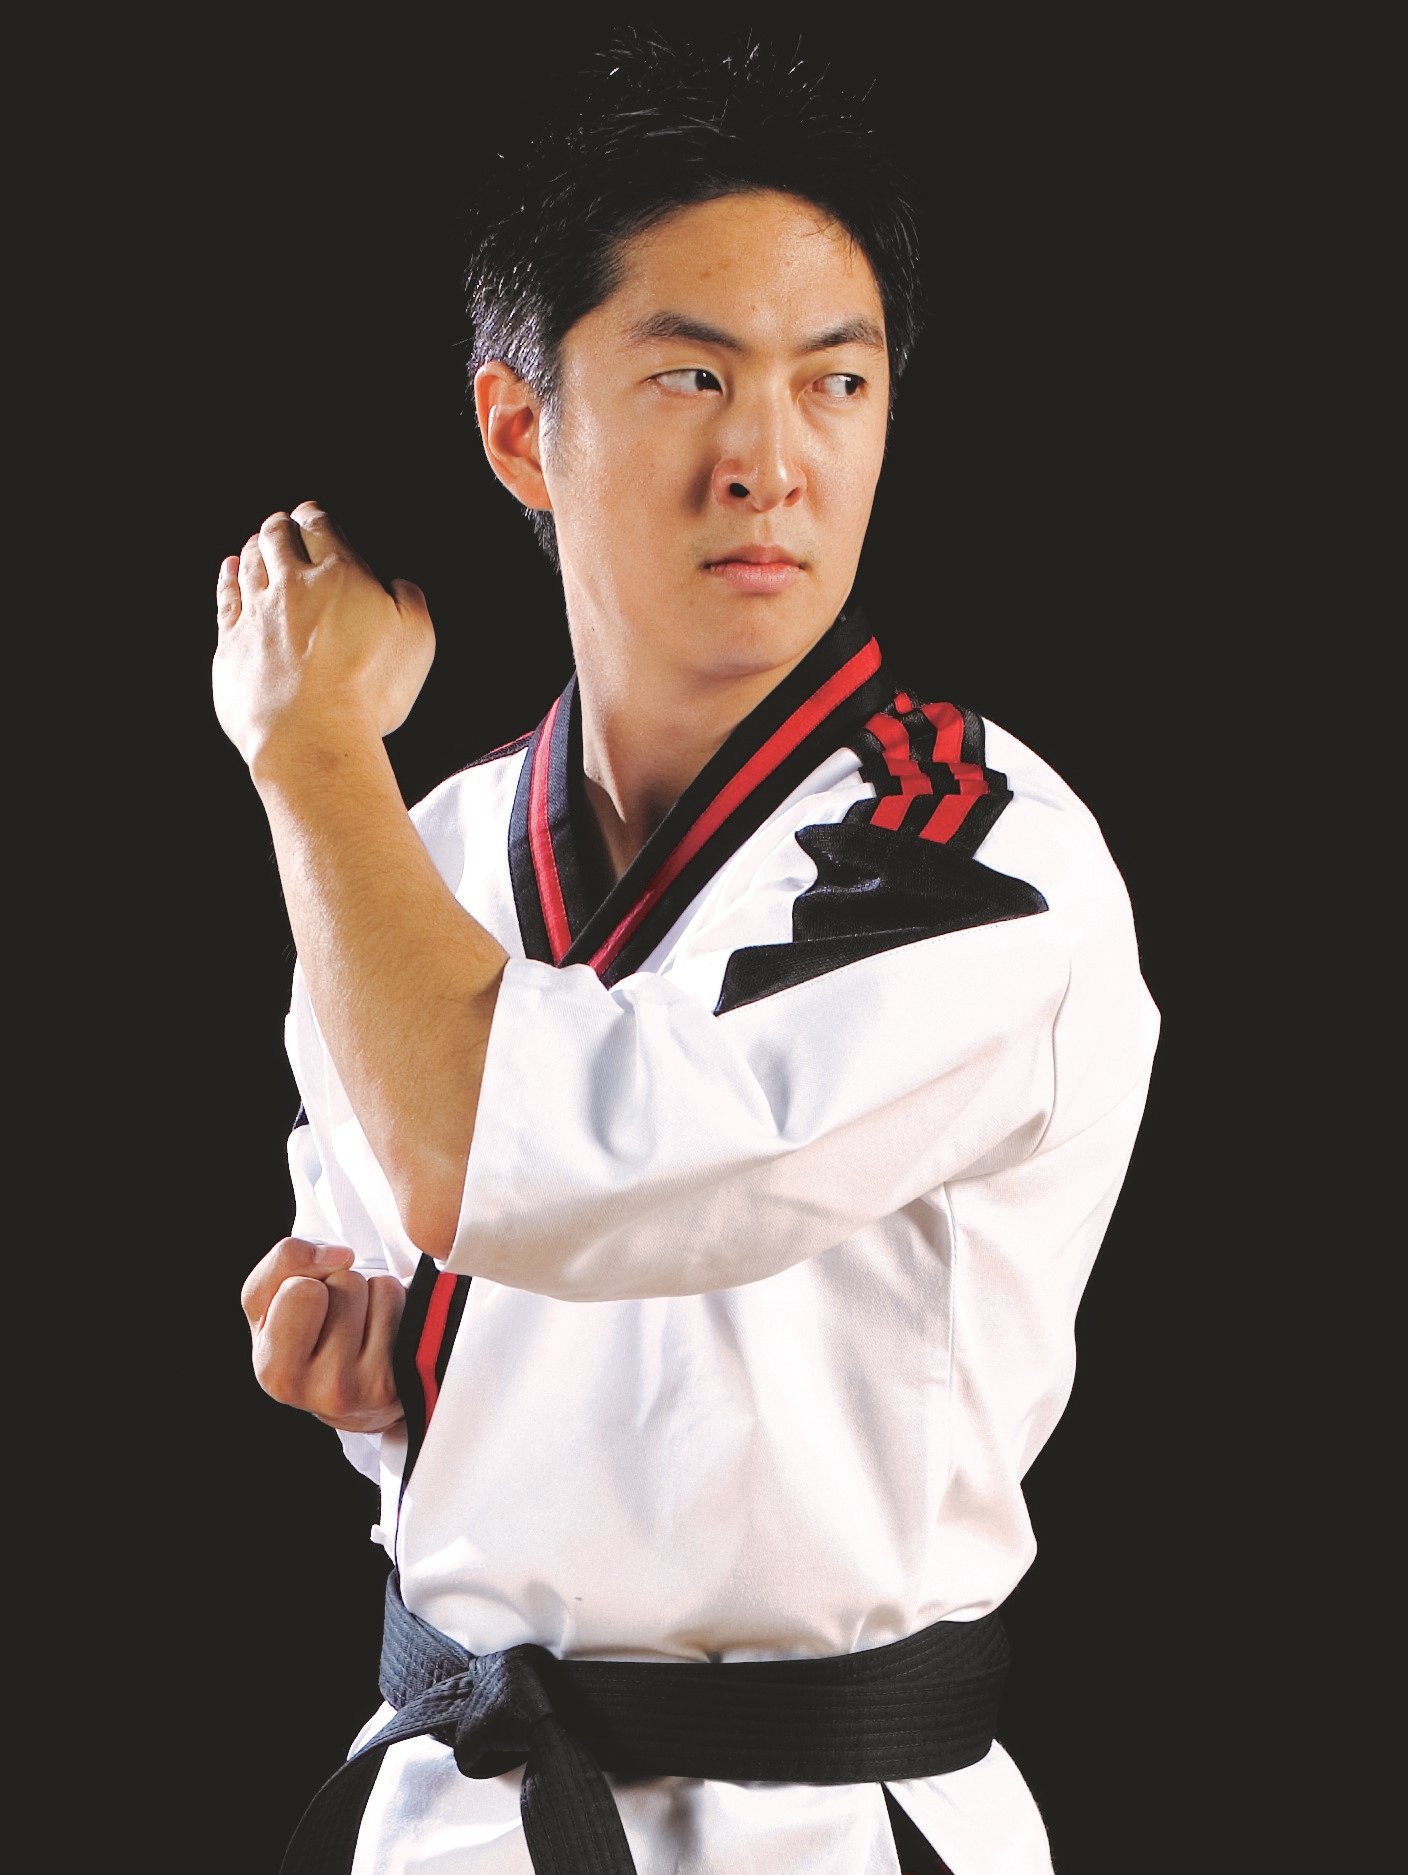 Kung Fu Long Fist Boxing